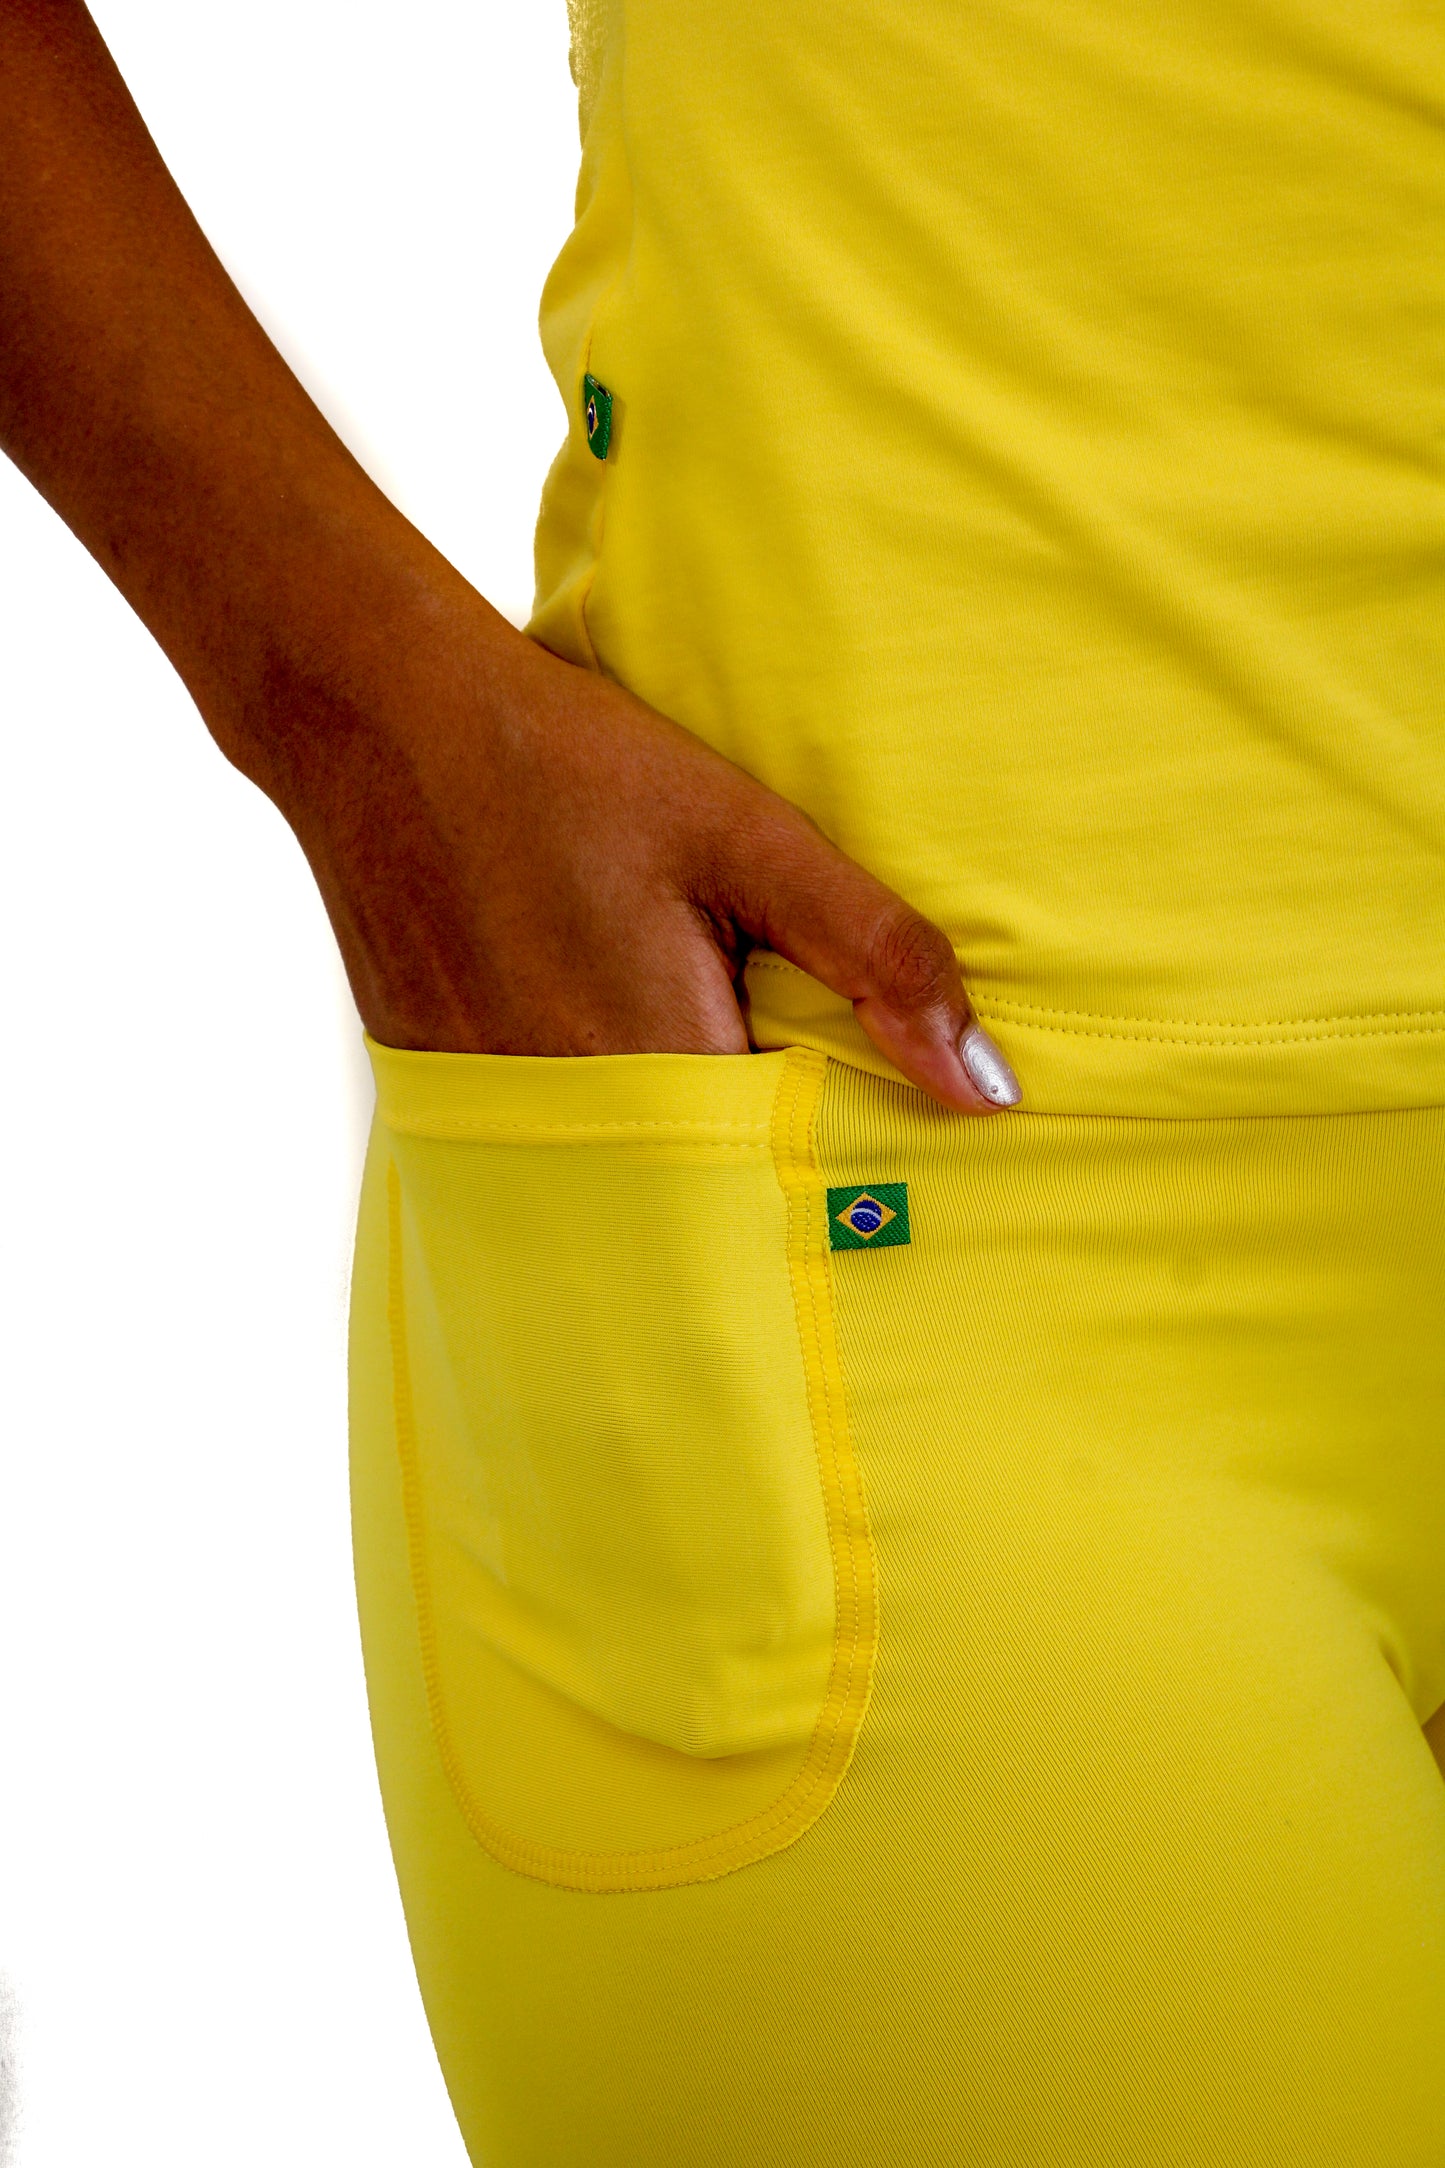 Yellow Shorts 6" High Waist side Pocket - biodegradable